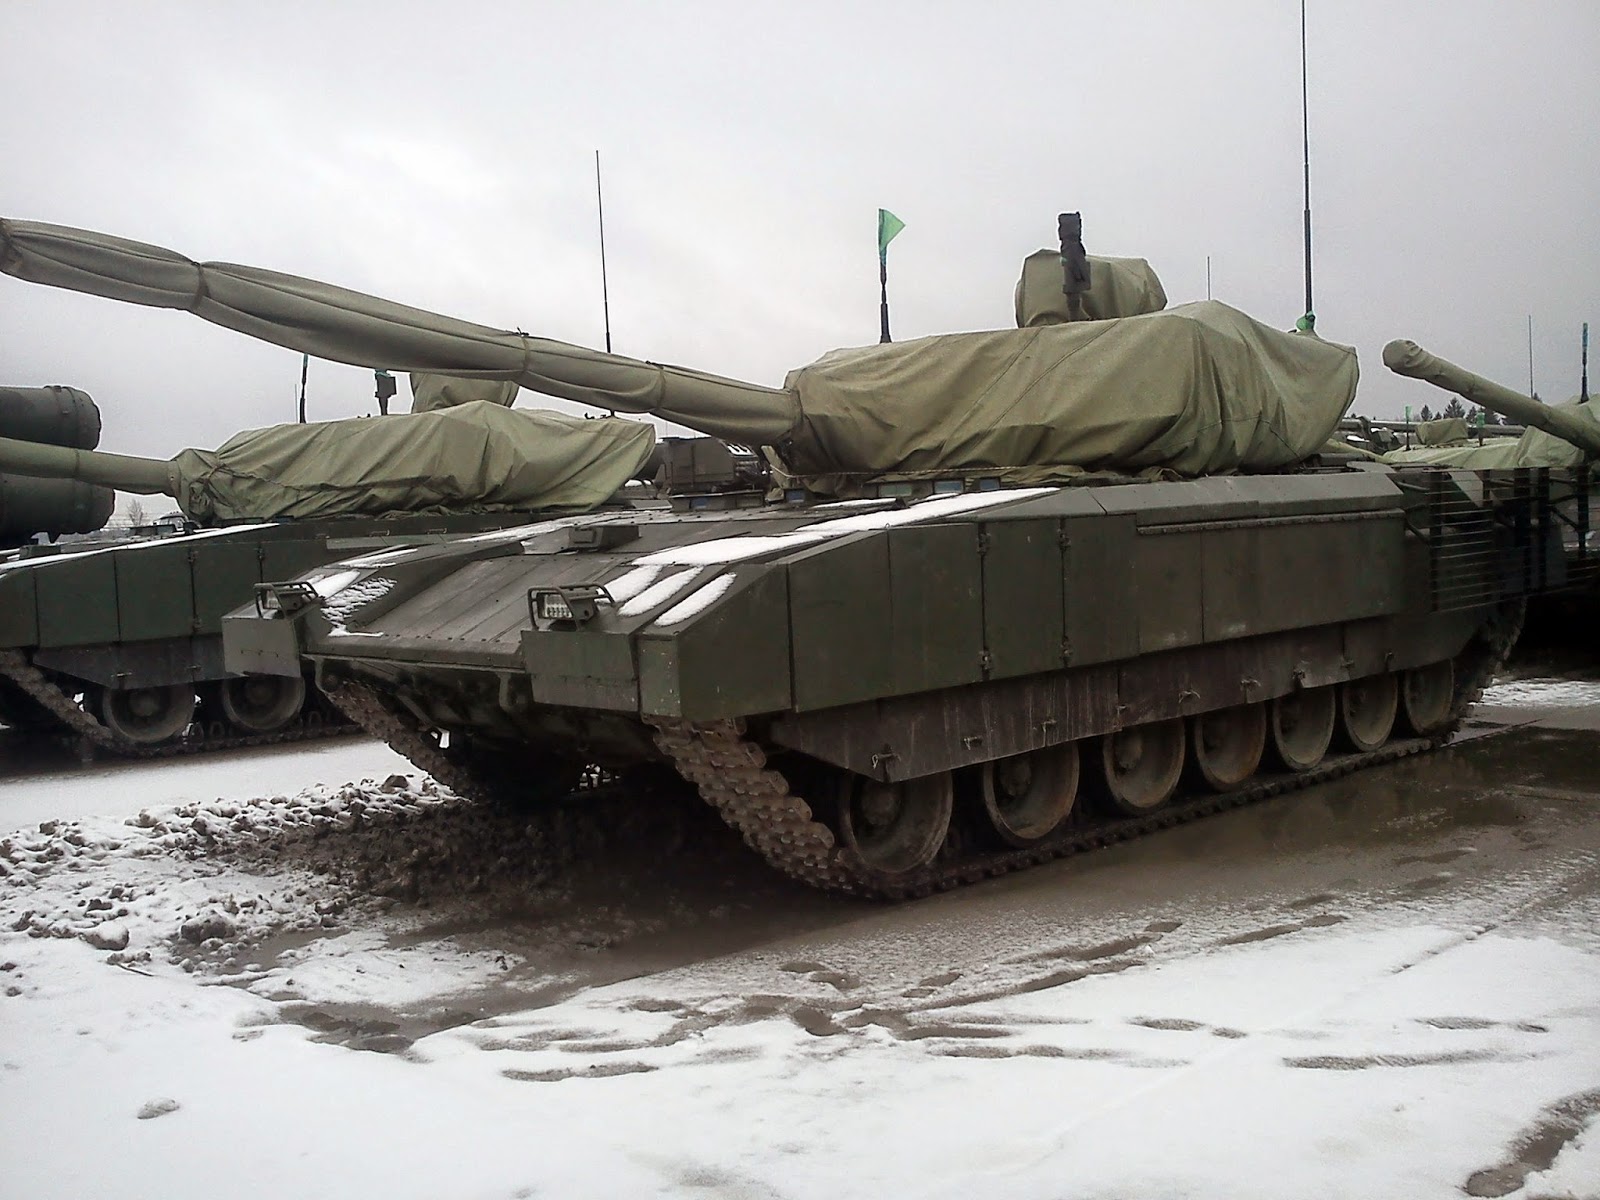 Русия се похвали с невиждана досега военна мощ - нови танкове и свръхзвукови бомбардировачи! (ВИДЕО)